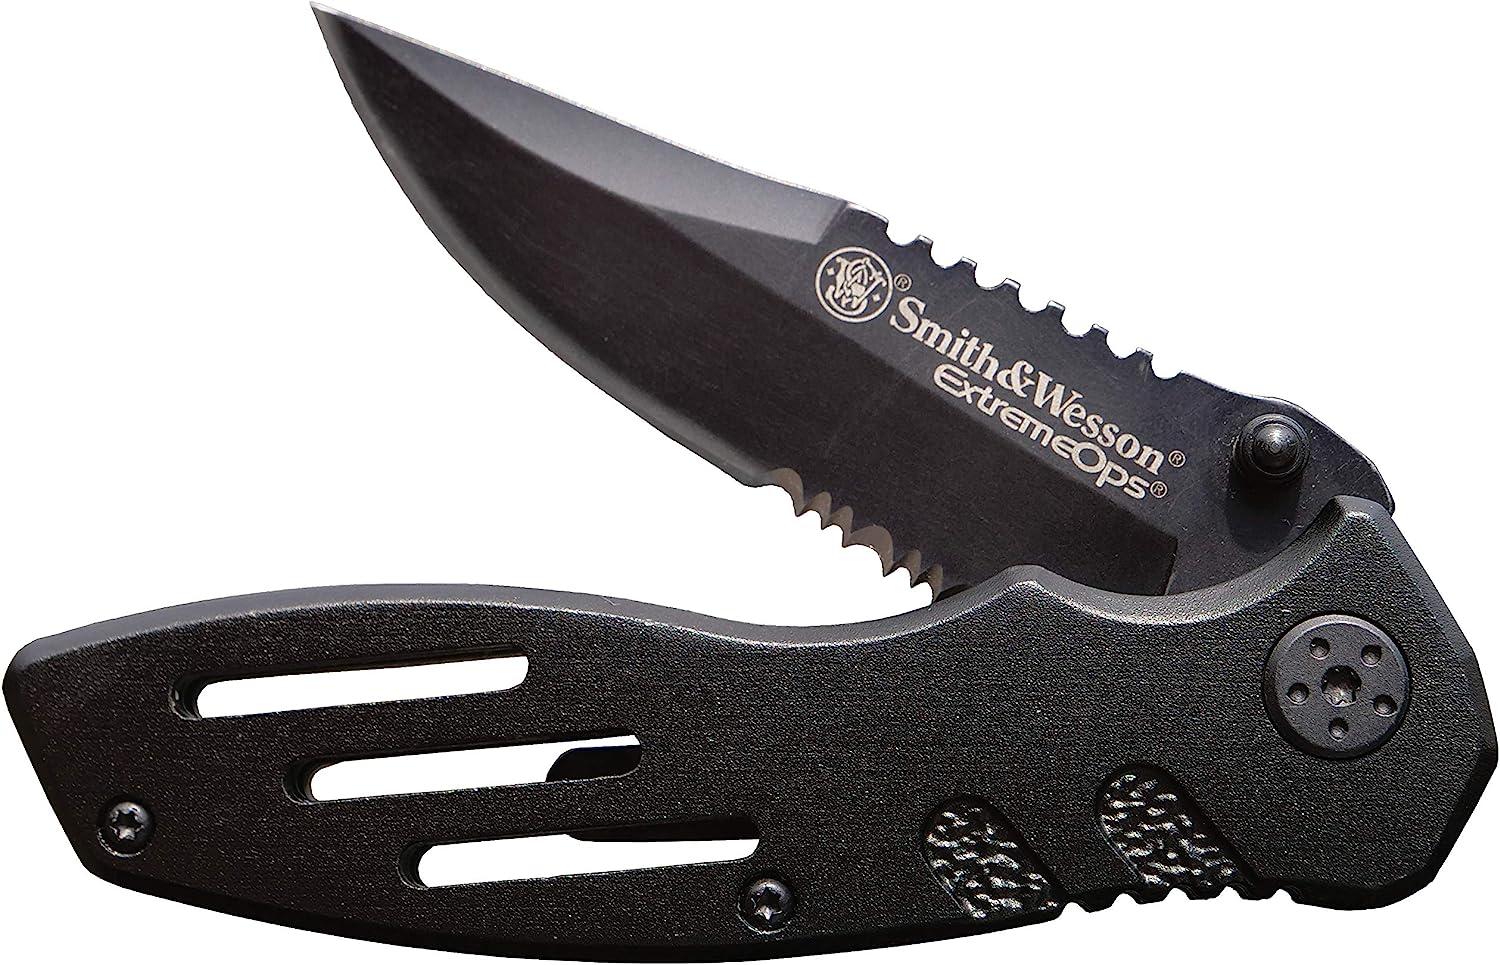 Smith & Wesson Aluminum Handle EMS Knife